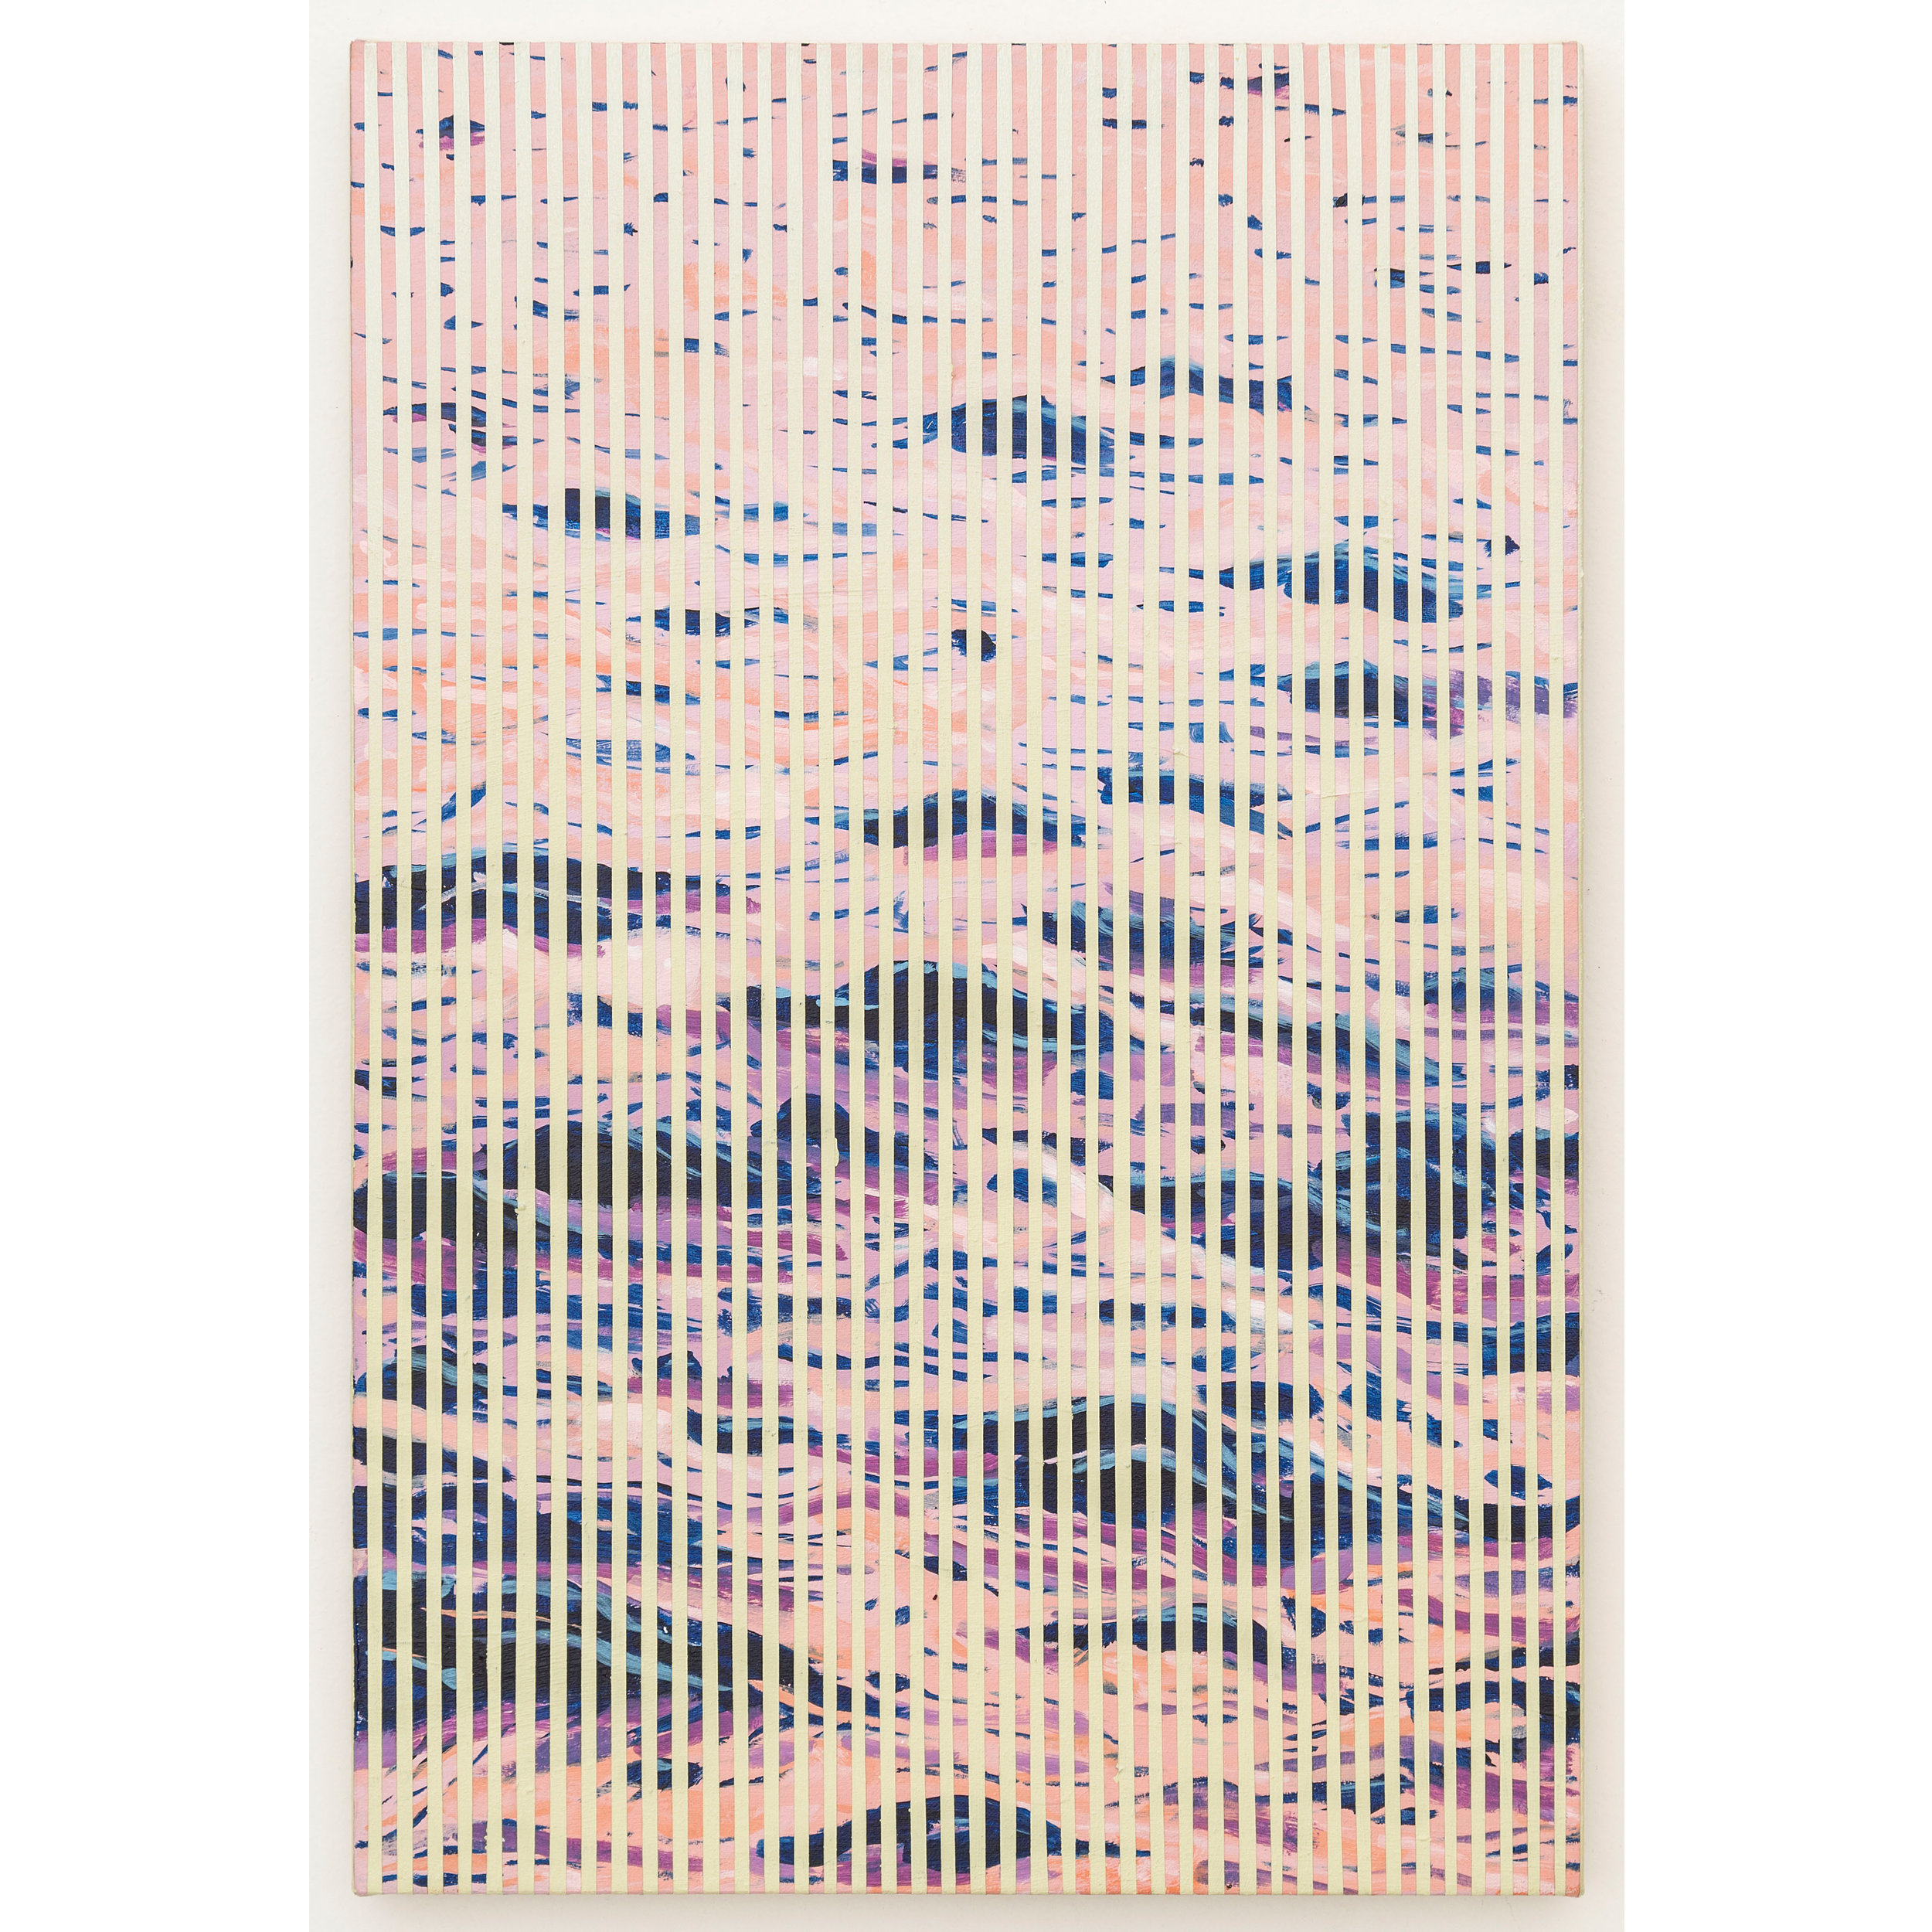   Wavenoise 2 , 2016, acrylic on canvas, 15 x 10 inches. 